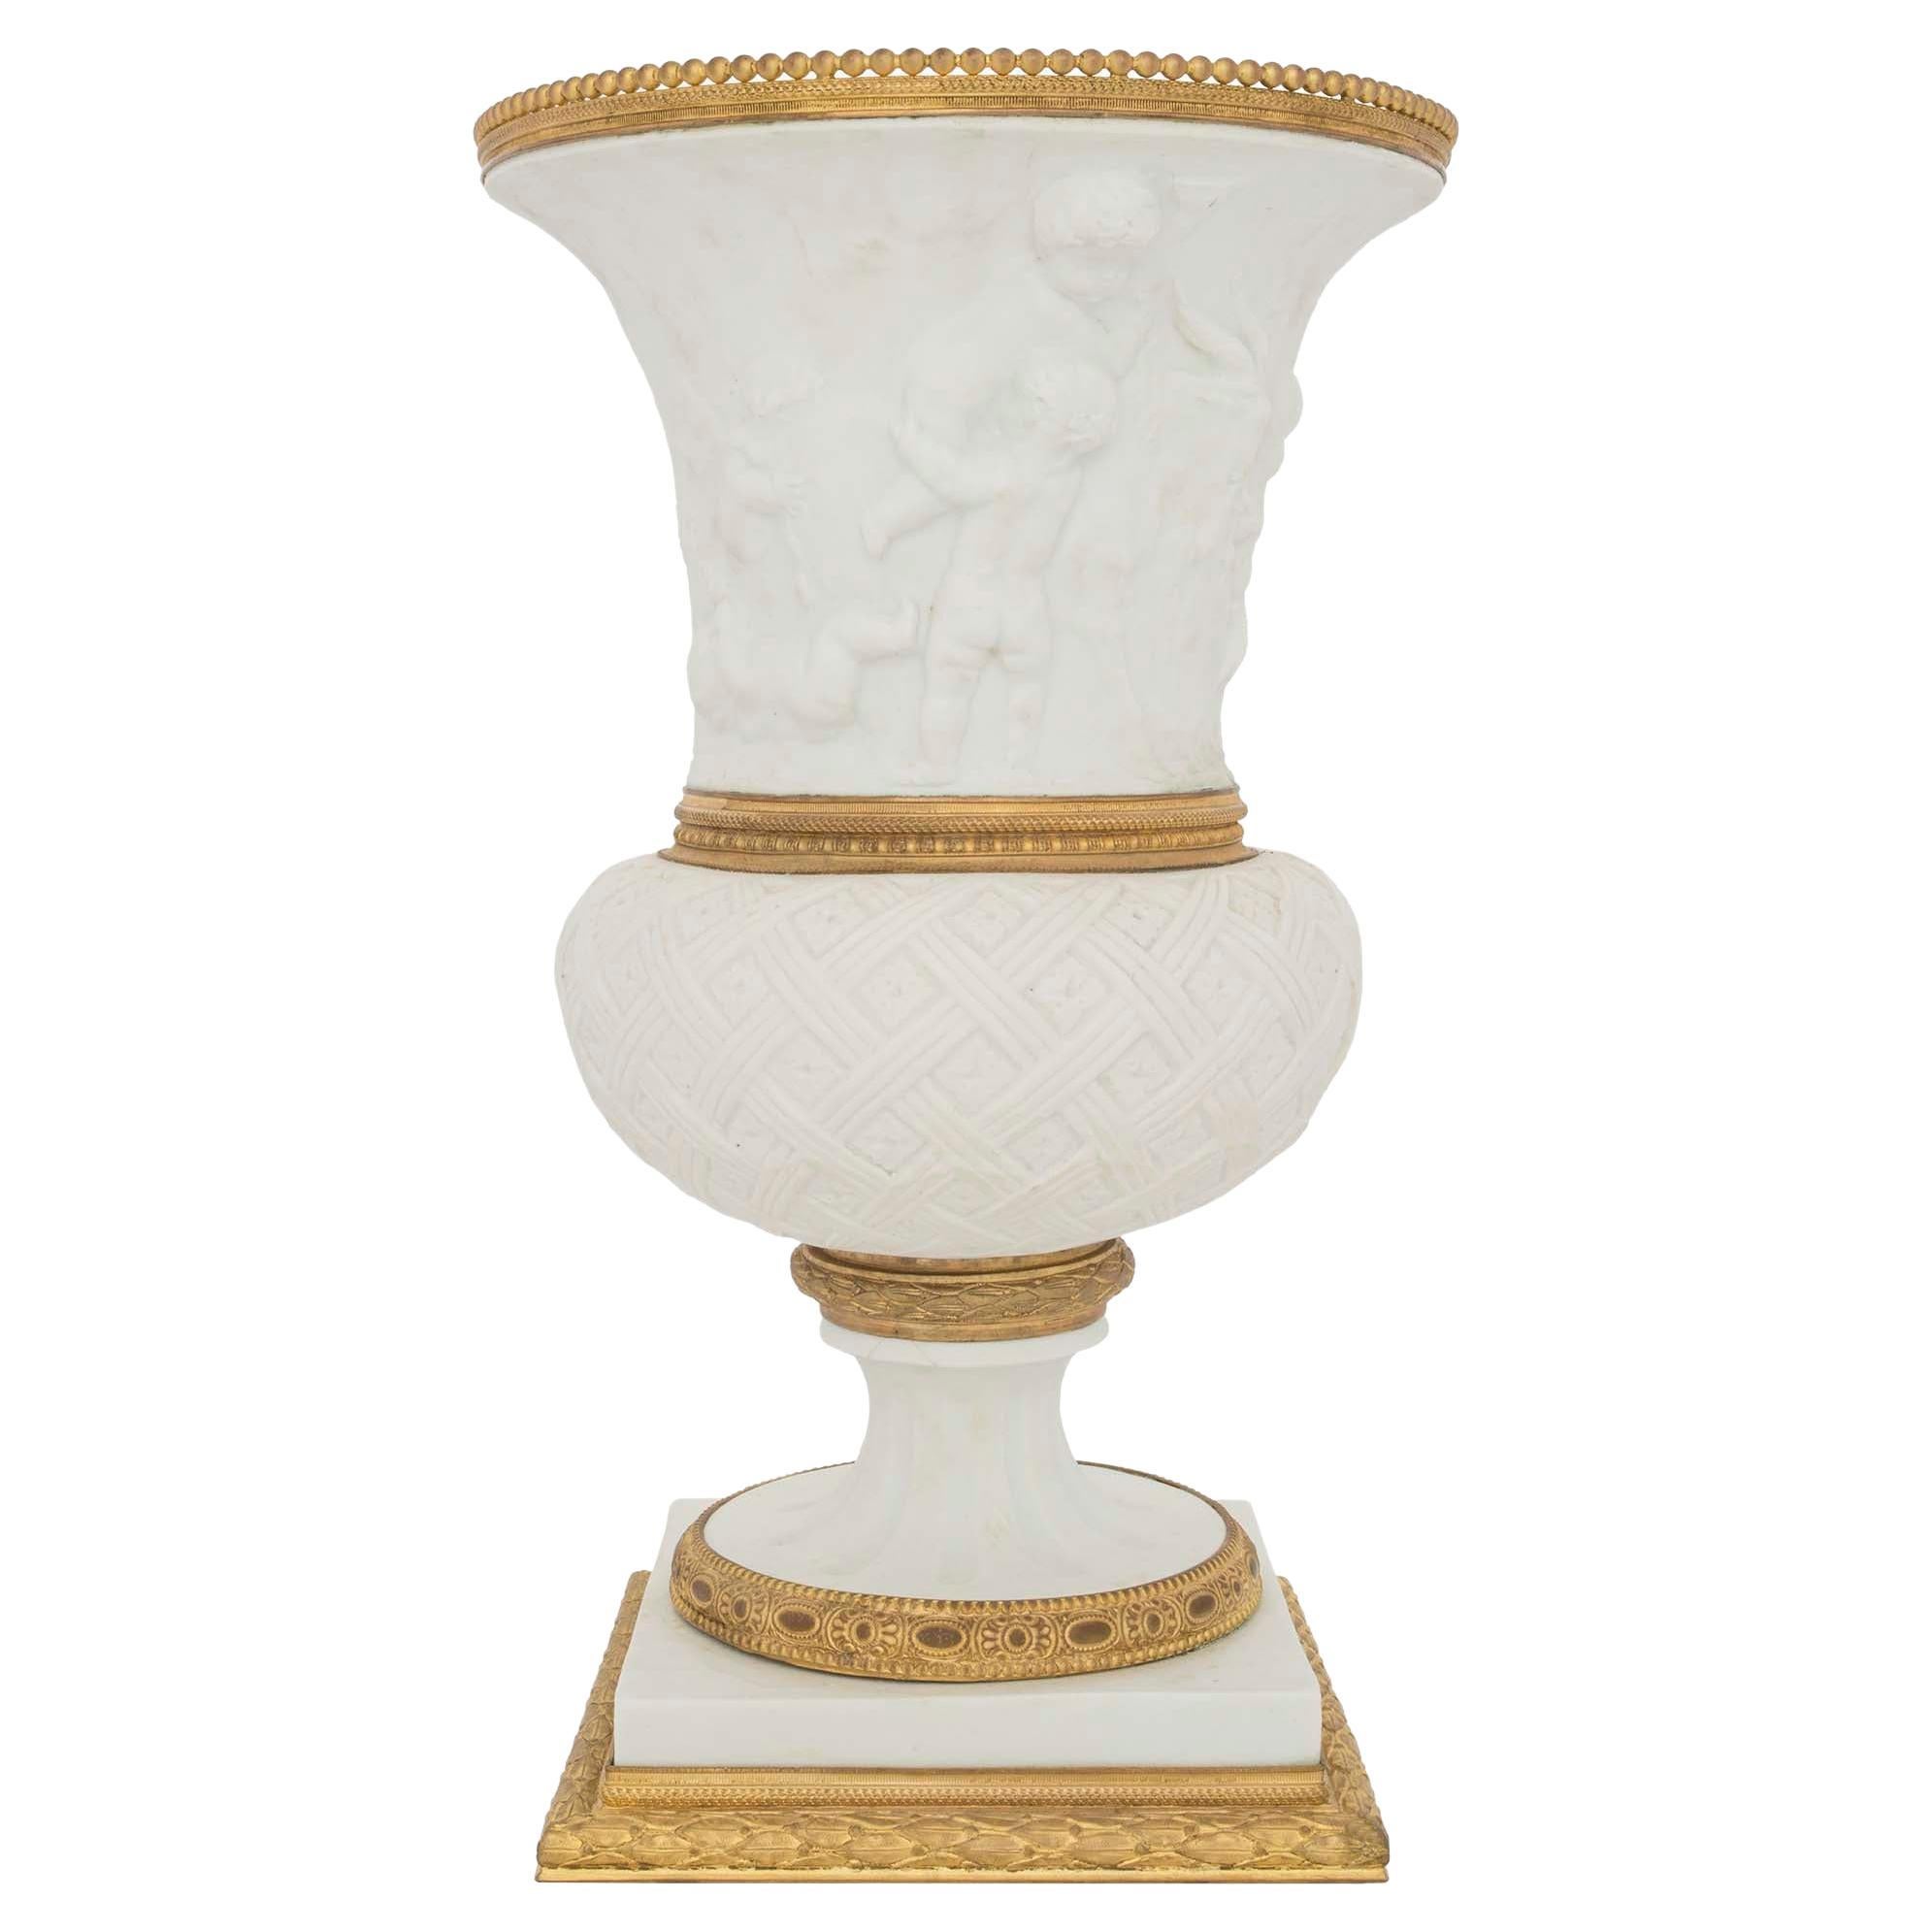 French 19th Century Louis XVI Style Porcelain and Ormolu Medici Designed Vase